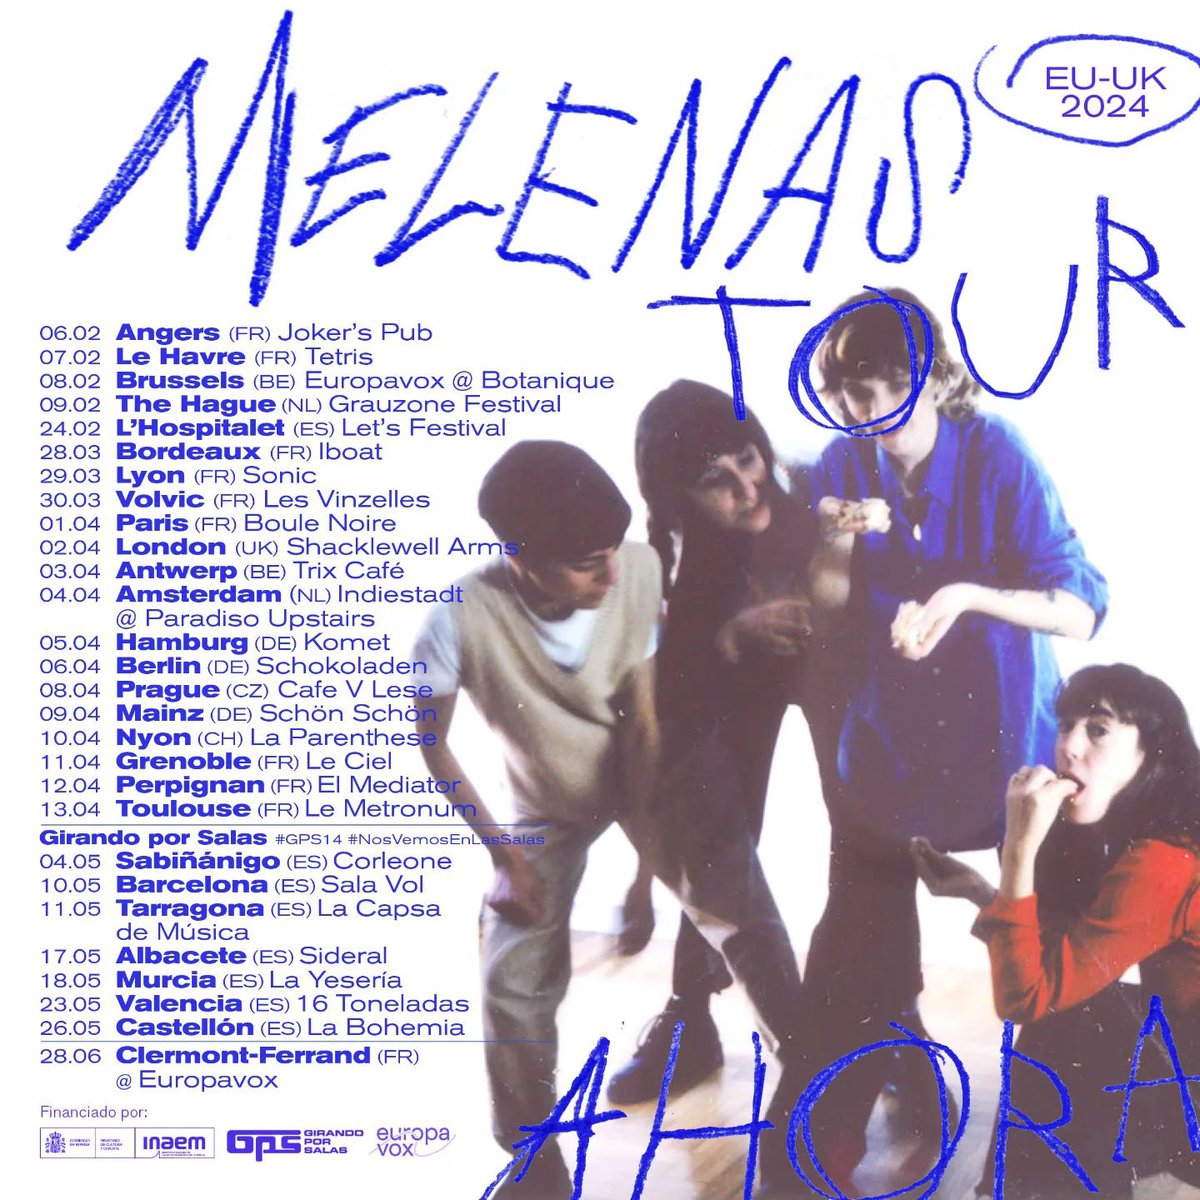 MELENAS are on tour in EU/UK right now! Paris tmrw (Apr 1) at @Laboulenoire! 🩷 @melenasband